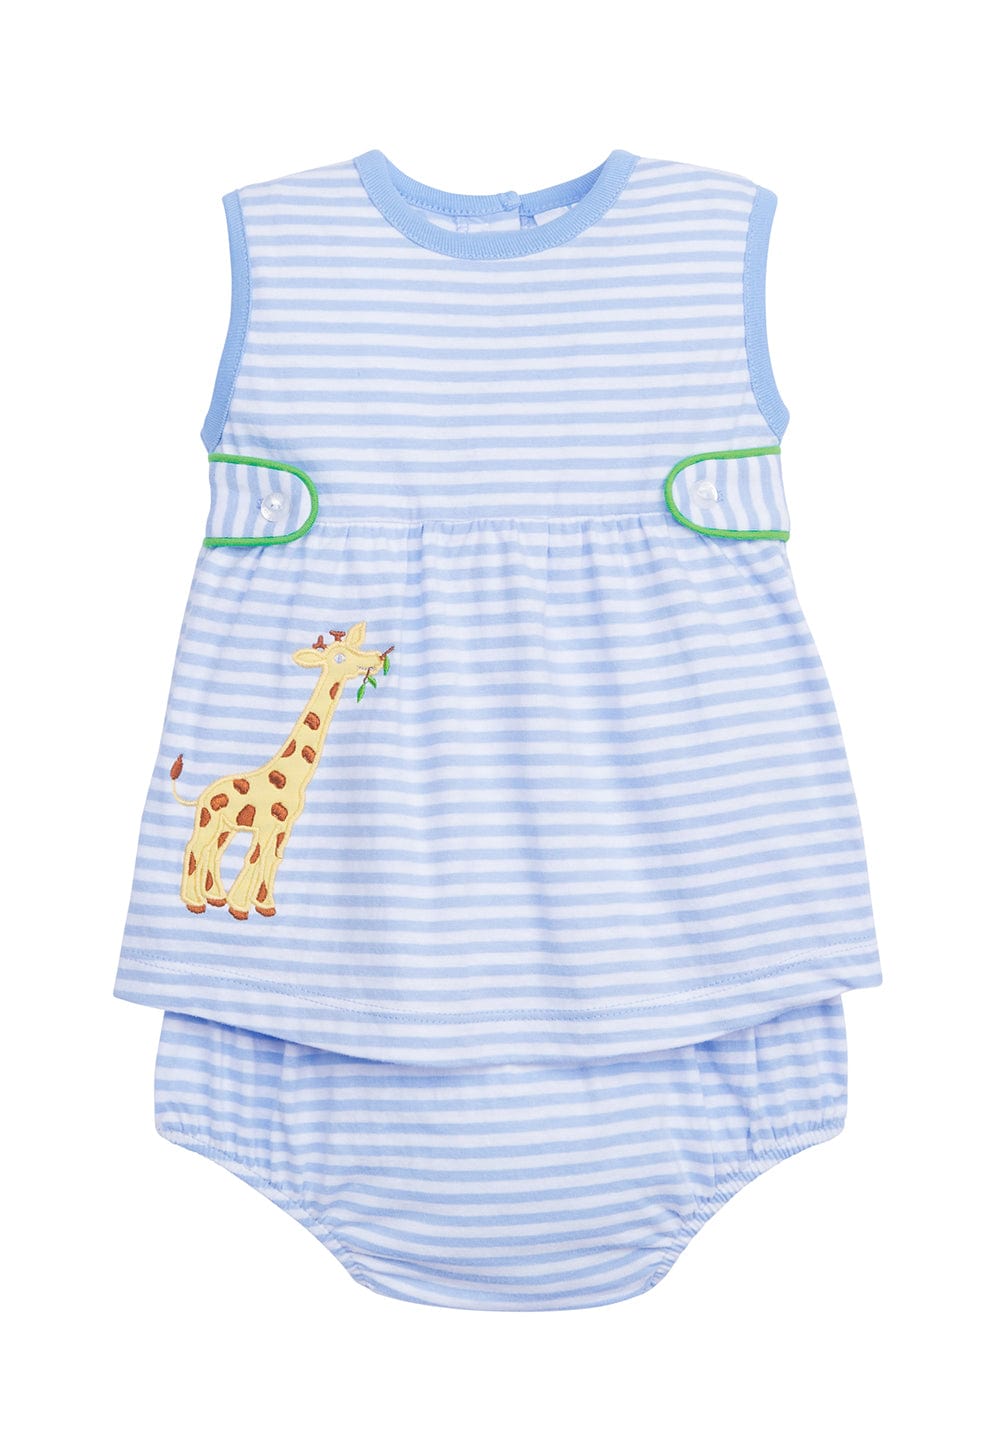 Little English baby boy diaper set, light blue knit two piece set with giraffe applique